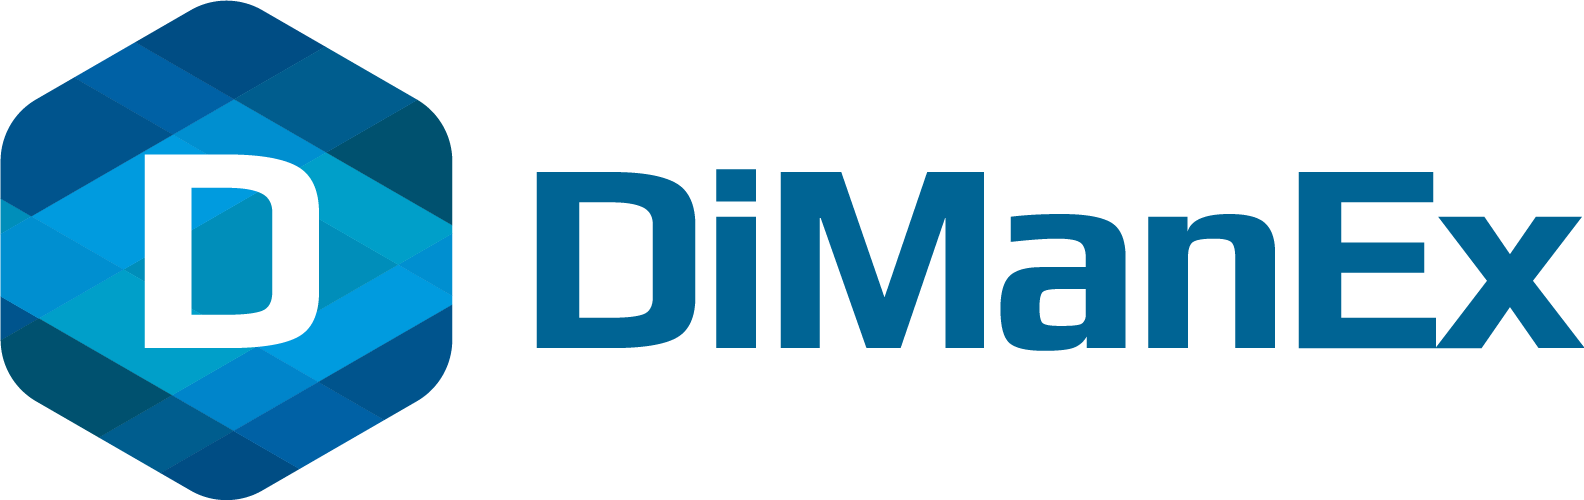 Partenariat mondial entre DiManEx et Werk24